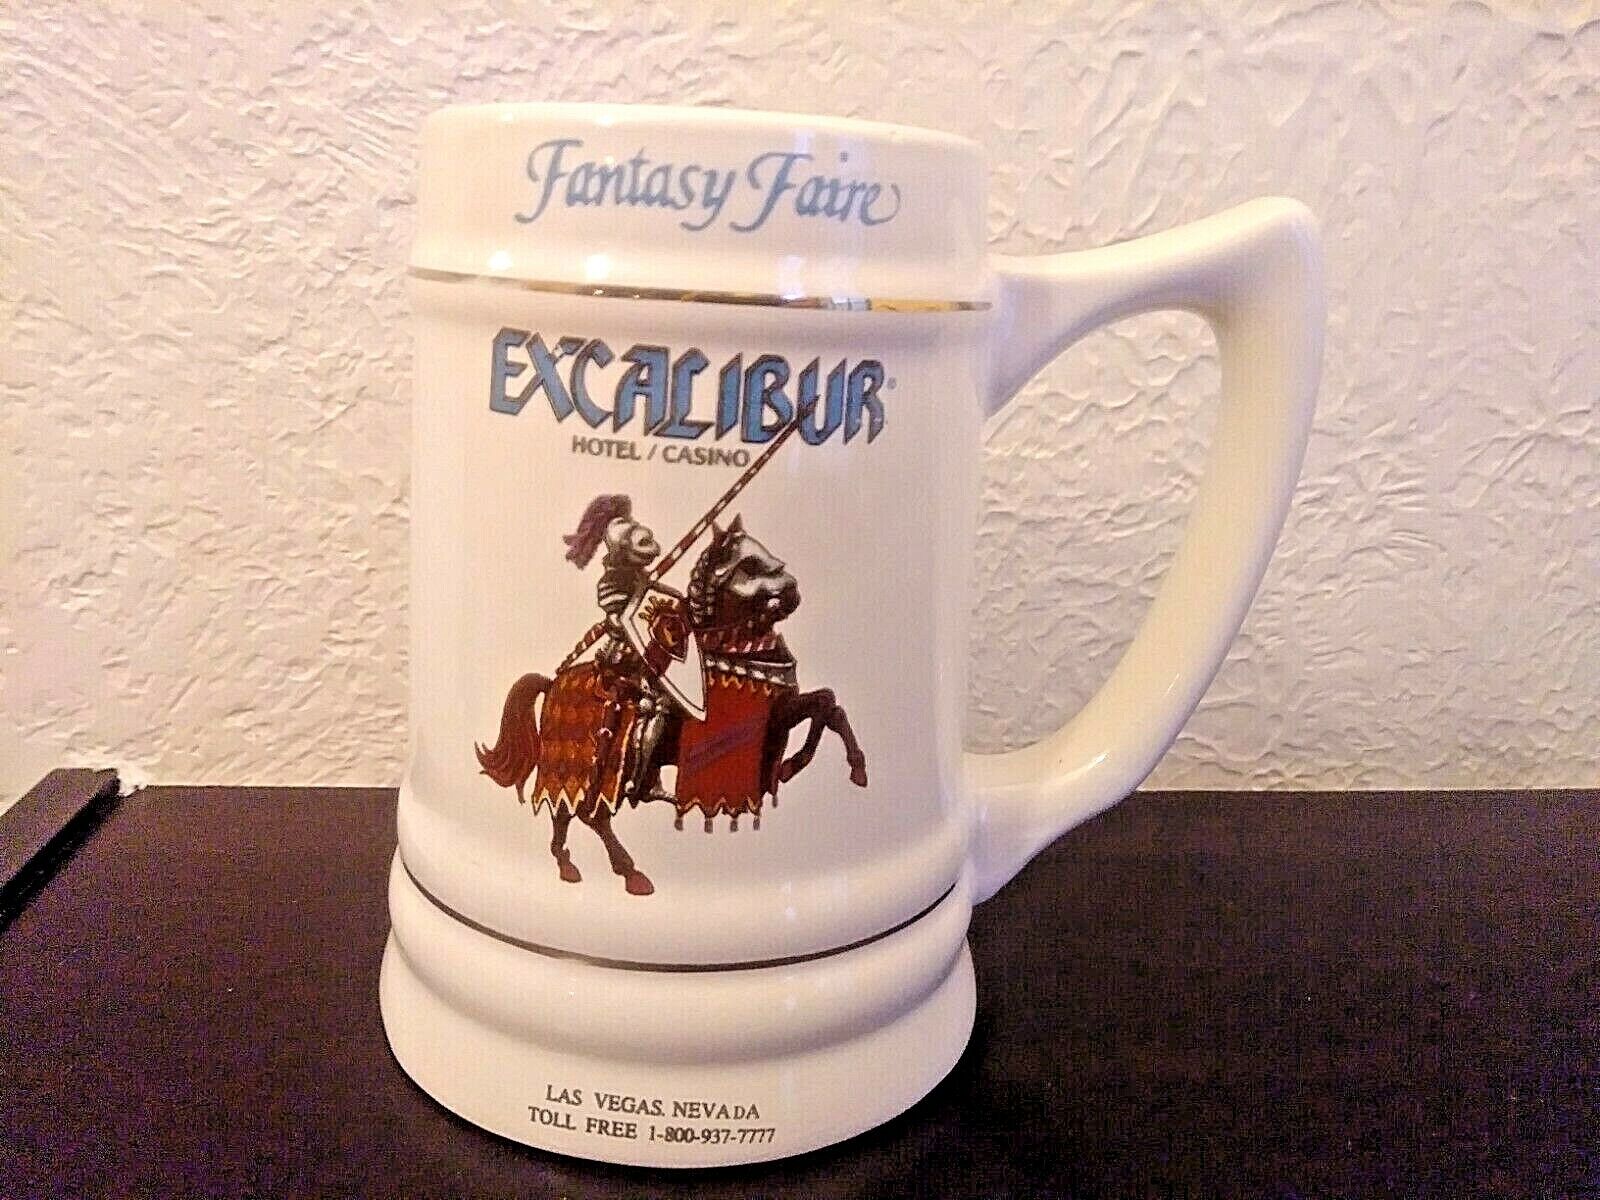 Excalibur Hotel Casino Fantasy Faire Ceramic Mug Stein Emerald Collection 5 3/8\